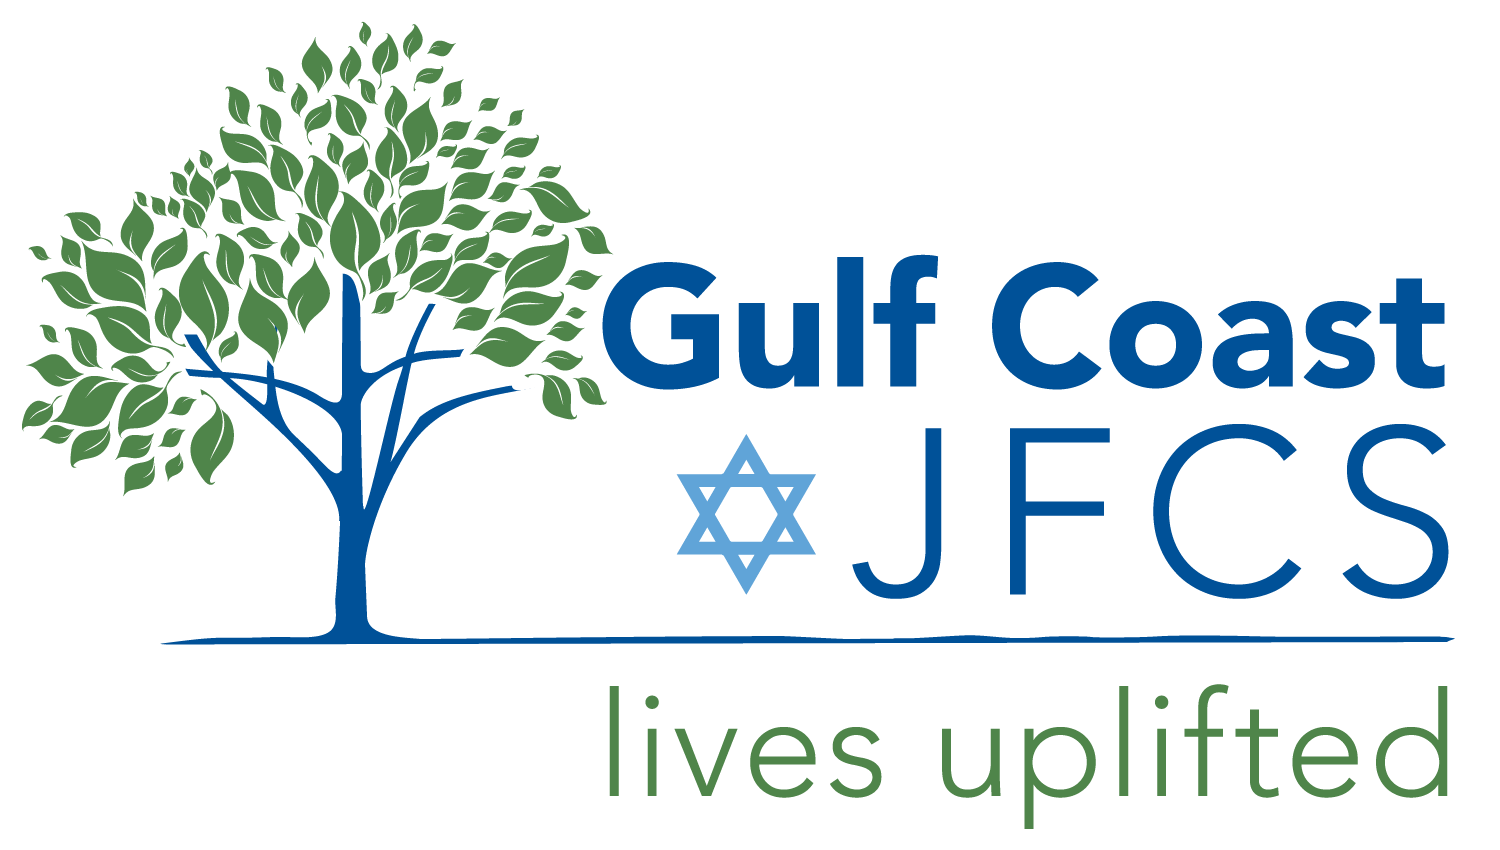 Gulf Coast Jewish Family Services